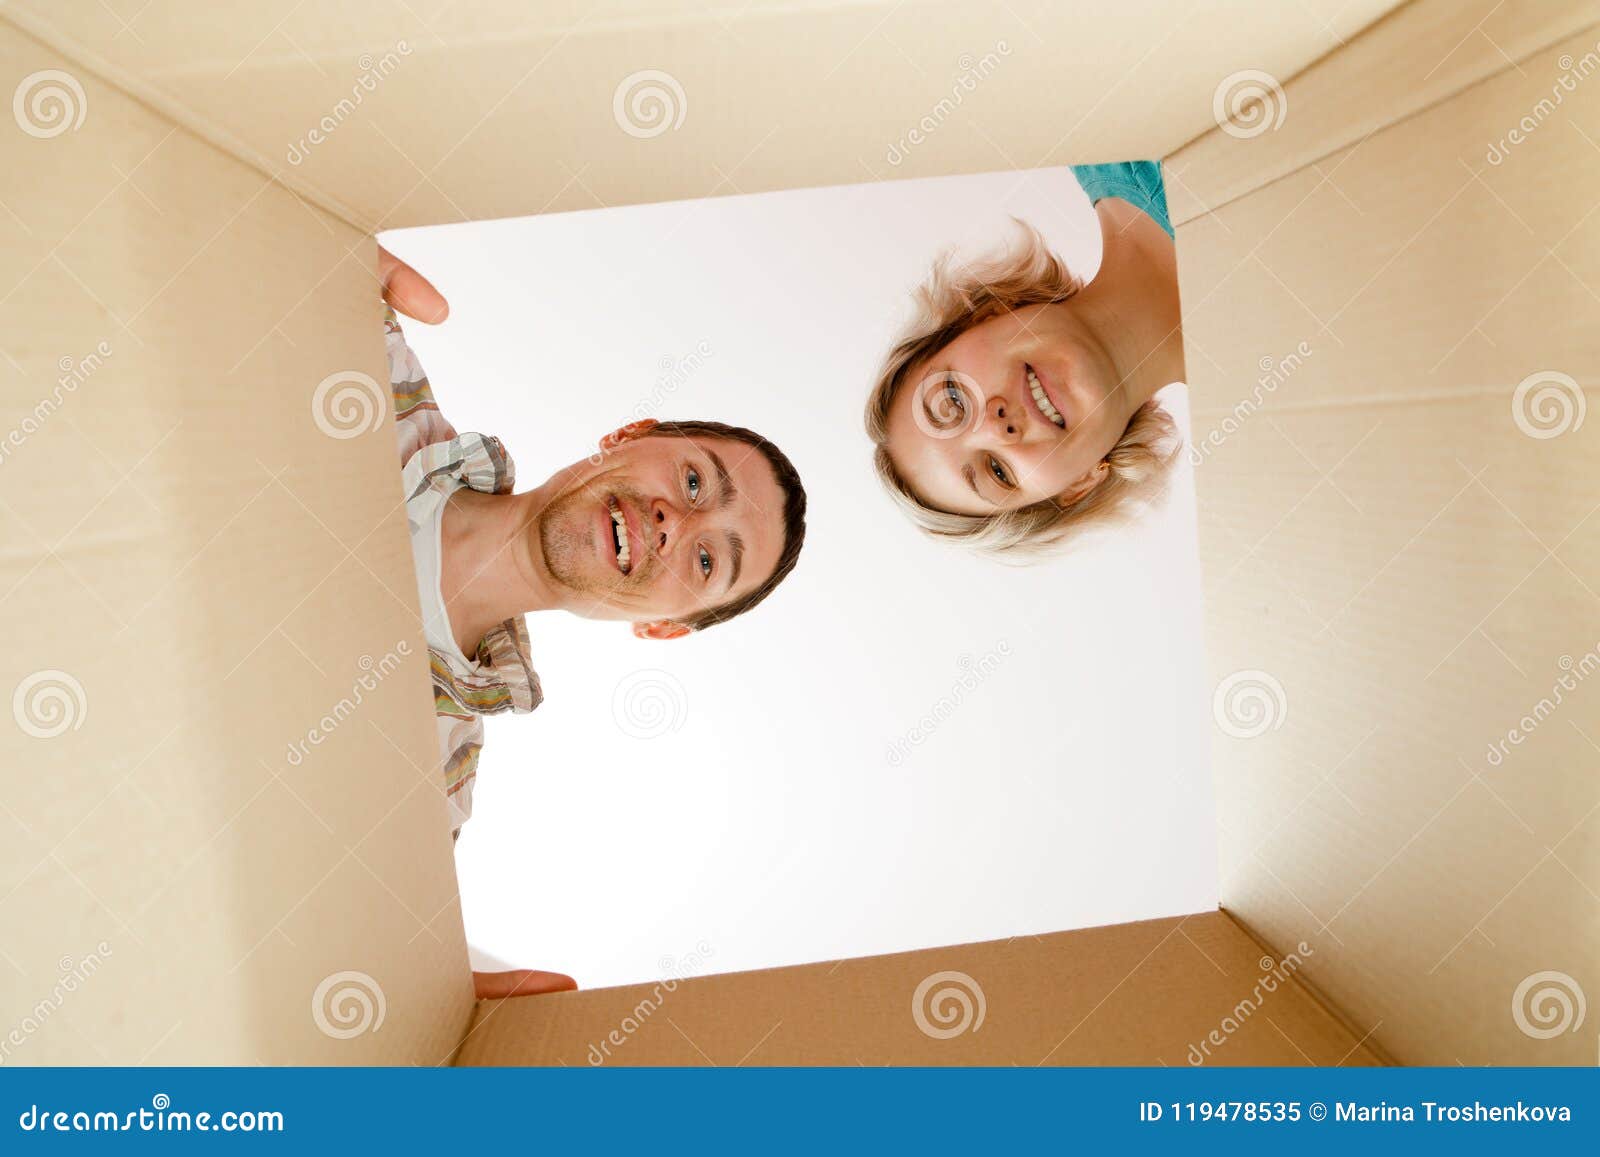 photo of man and woman peering into cardboard box